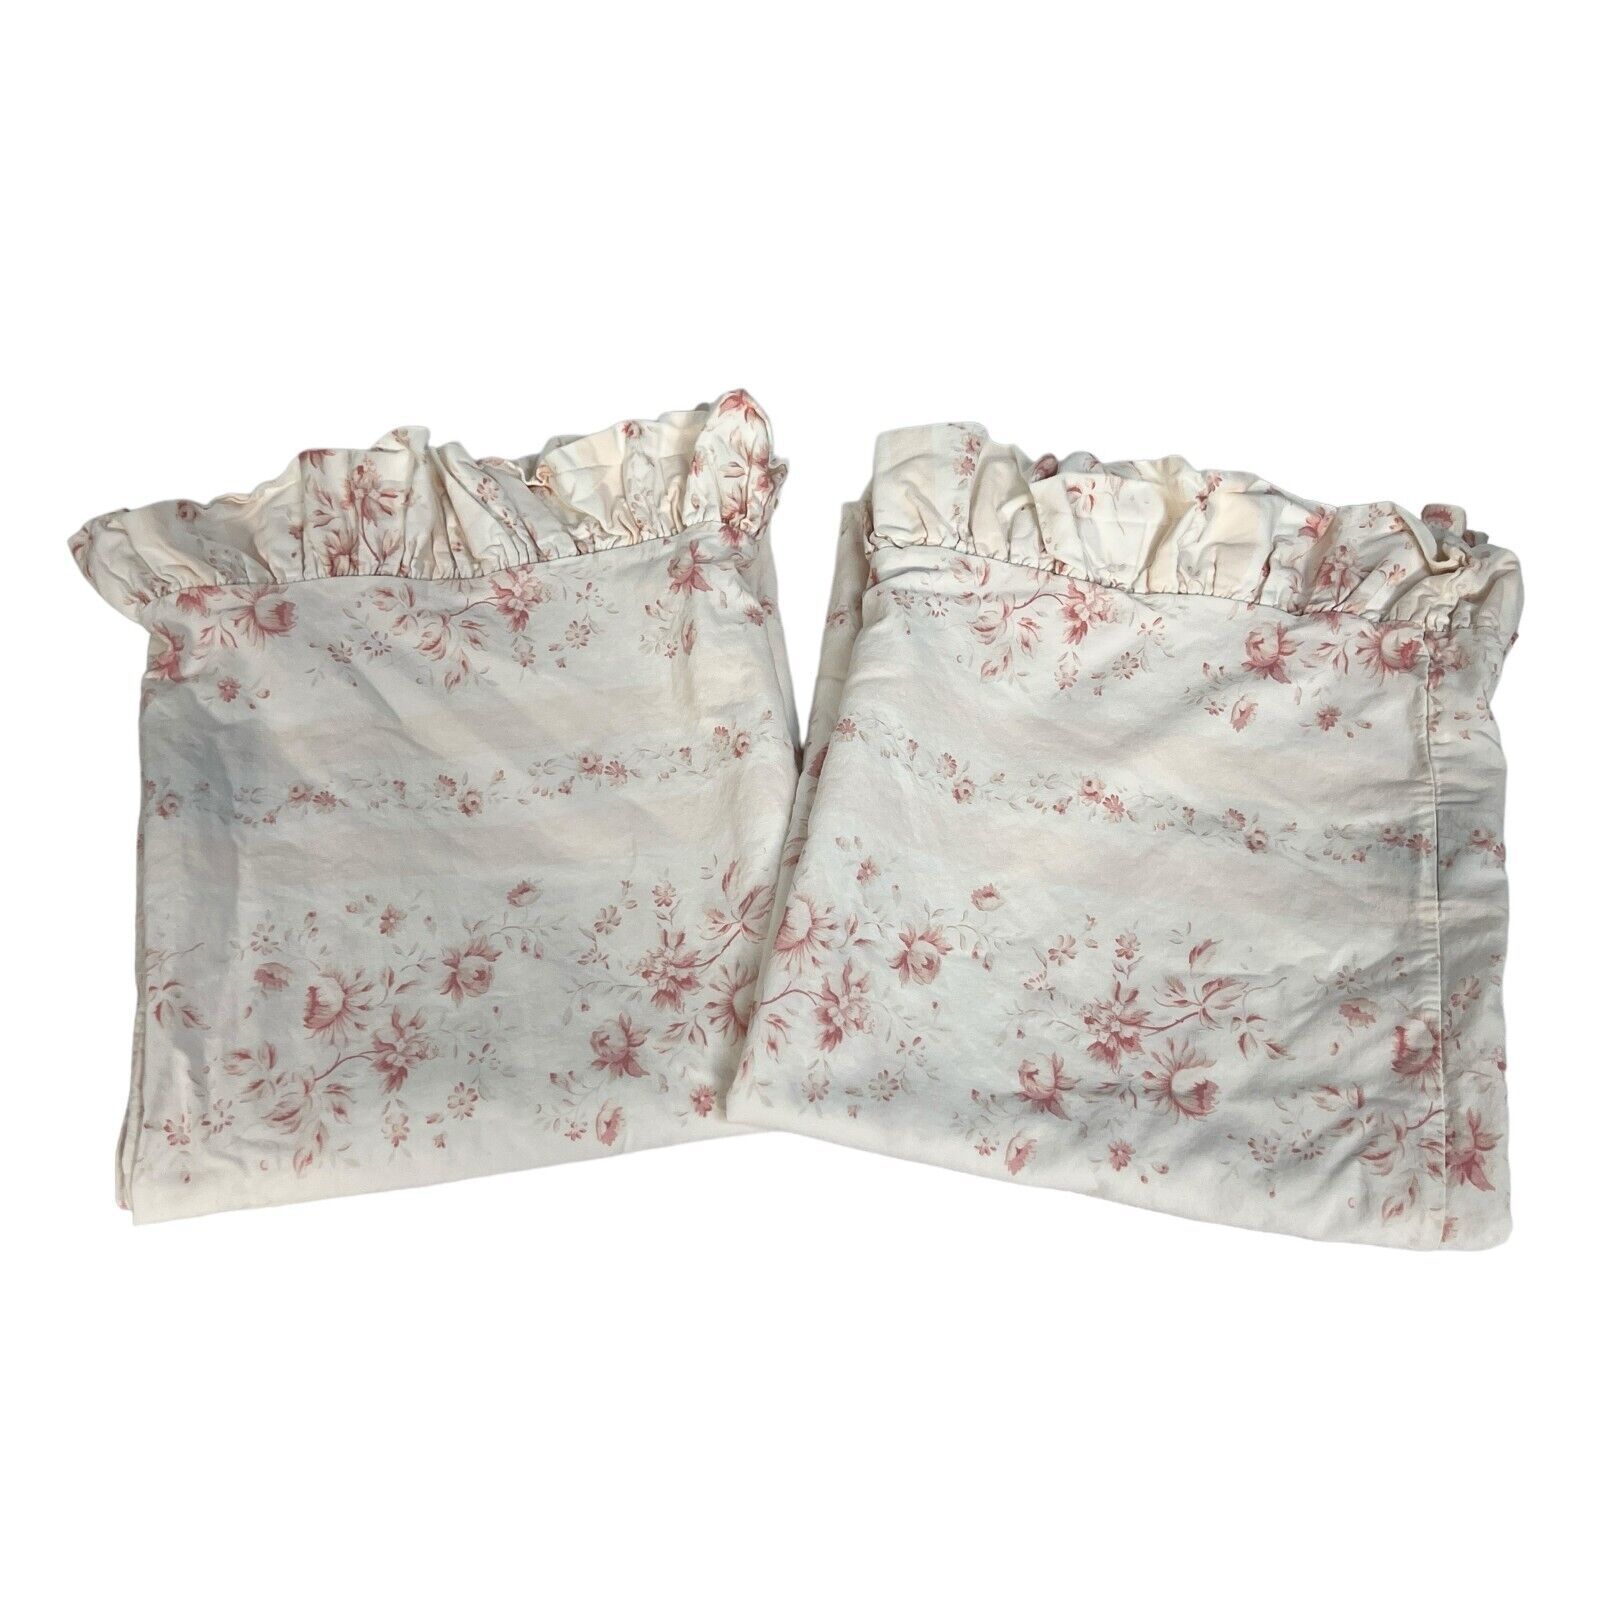 Vintage Lauren Ralph Lauren Heartland Stripes Pink Roses King Size Pillowcases